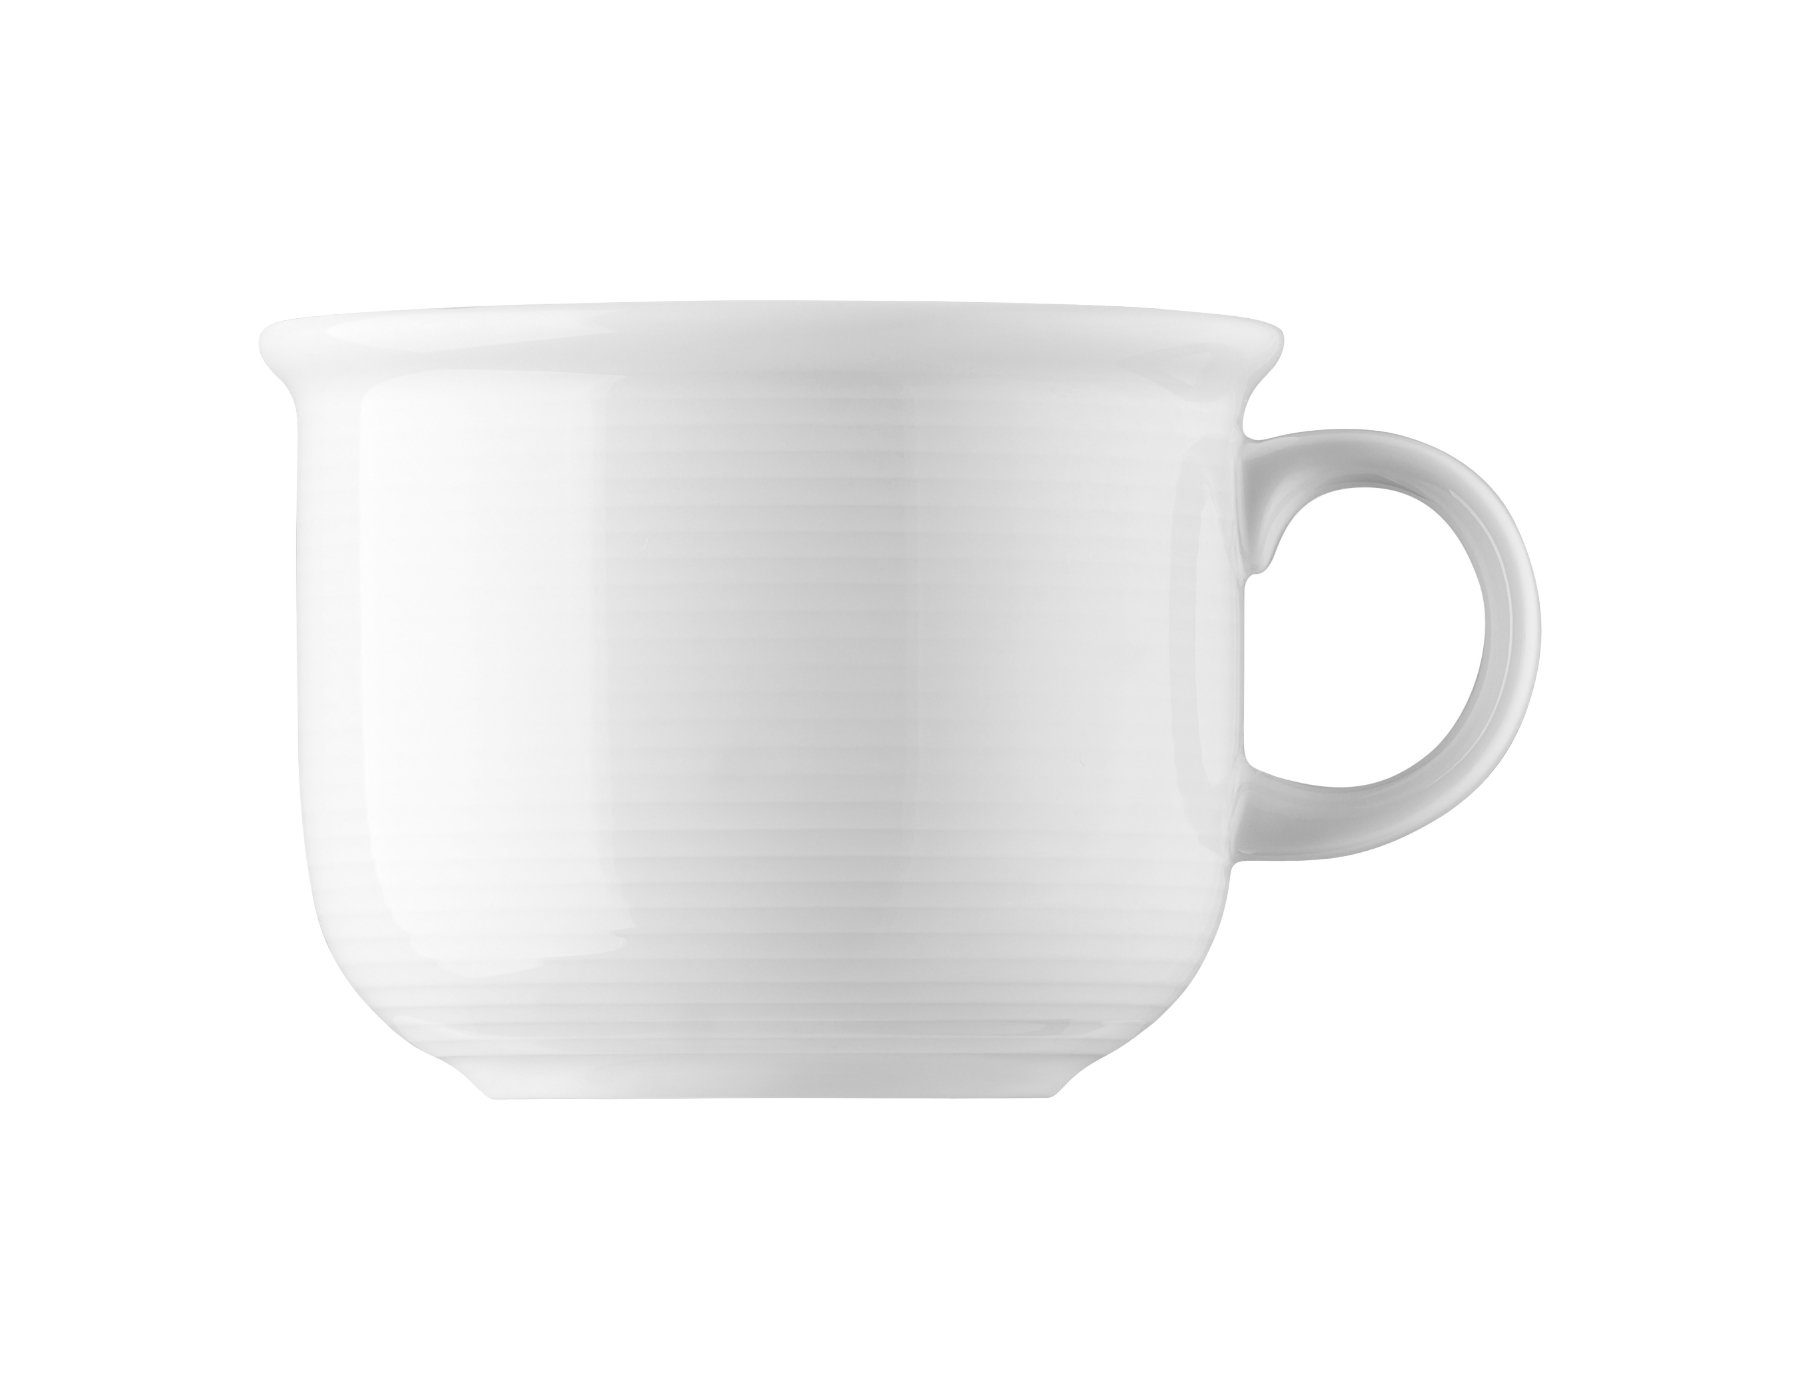 Kaffee-Obertasse - TREND Weiß Thomas Porzellan, mikrowellengeeignet Porzellan, Tasse 6 Stück, Porzellan - und spülmaschinenfest